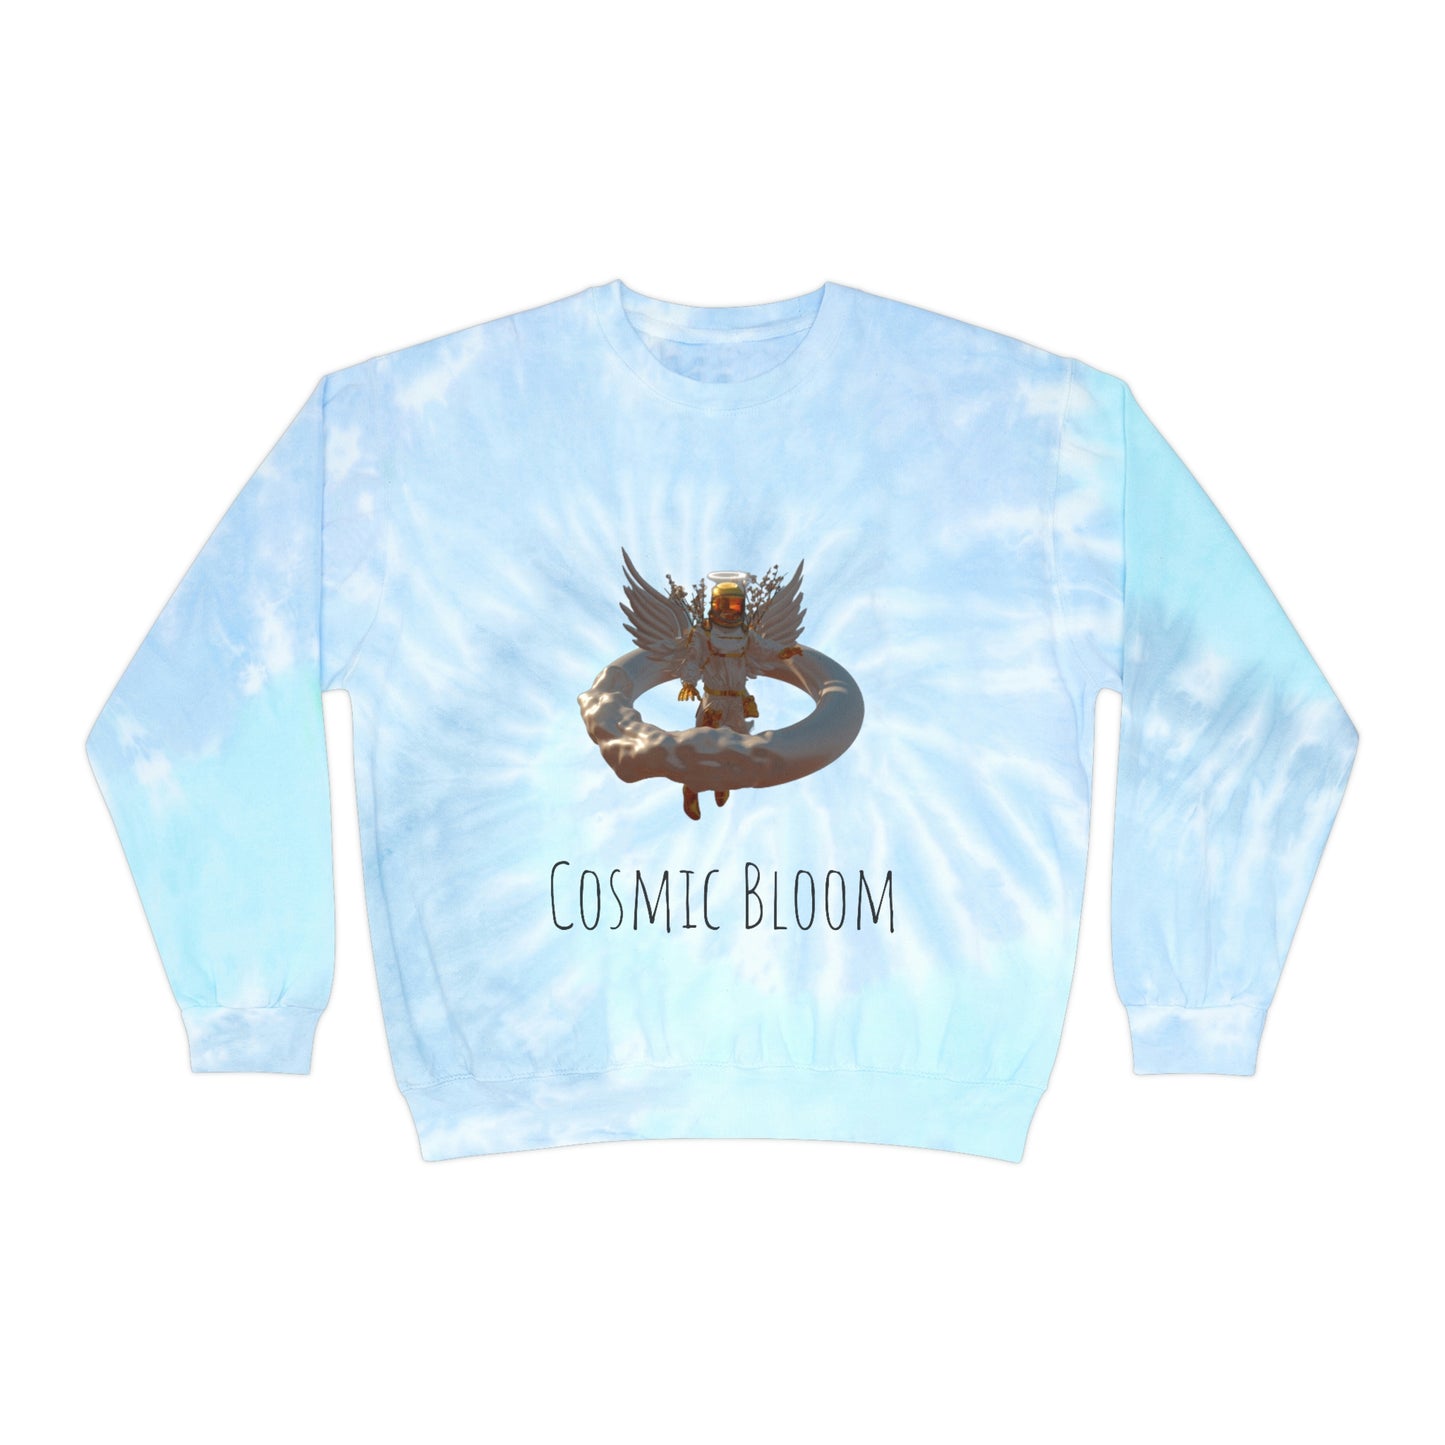 'Cosmic Bloom' Unisex Tie-Dye Sweatshirt